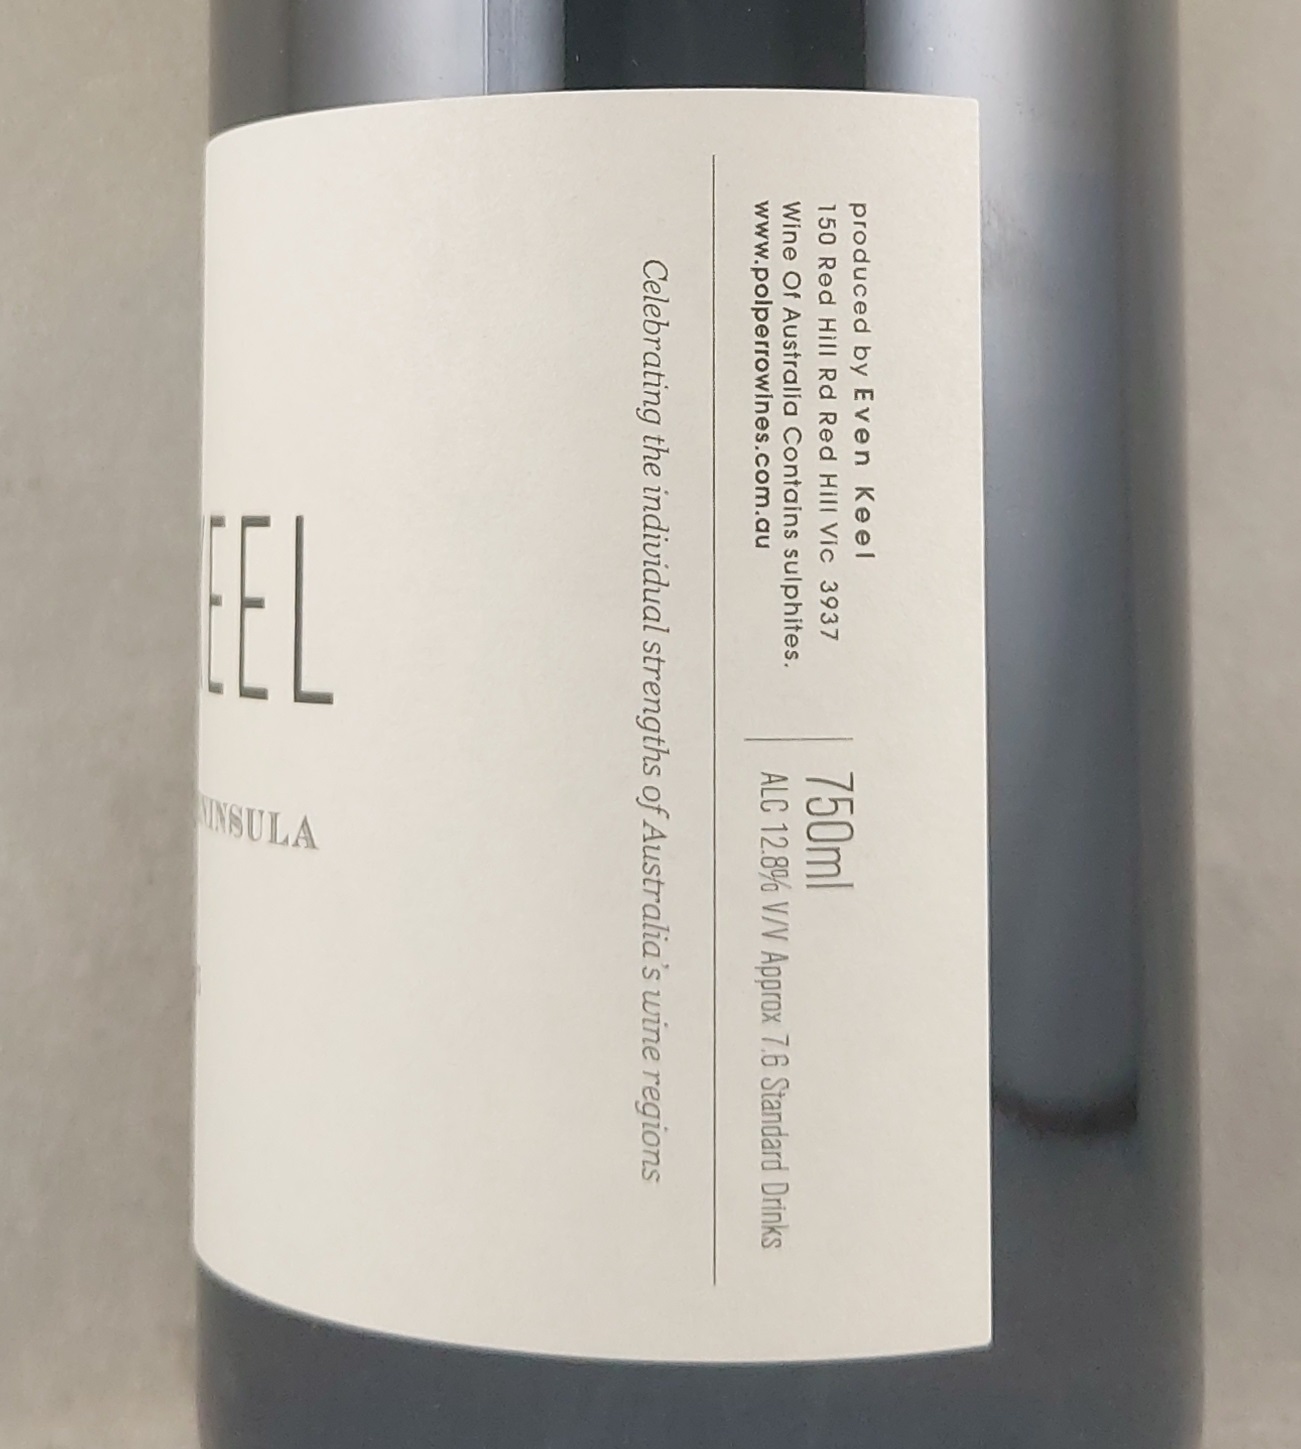 Polperro Even Keel Pinot Gris Mornington Peninsula 2020 Back Label